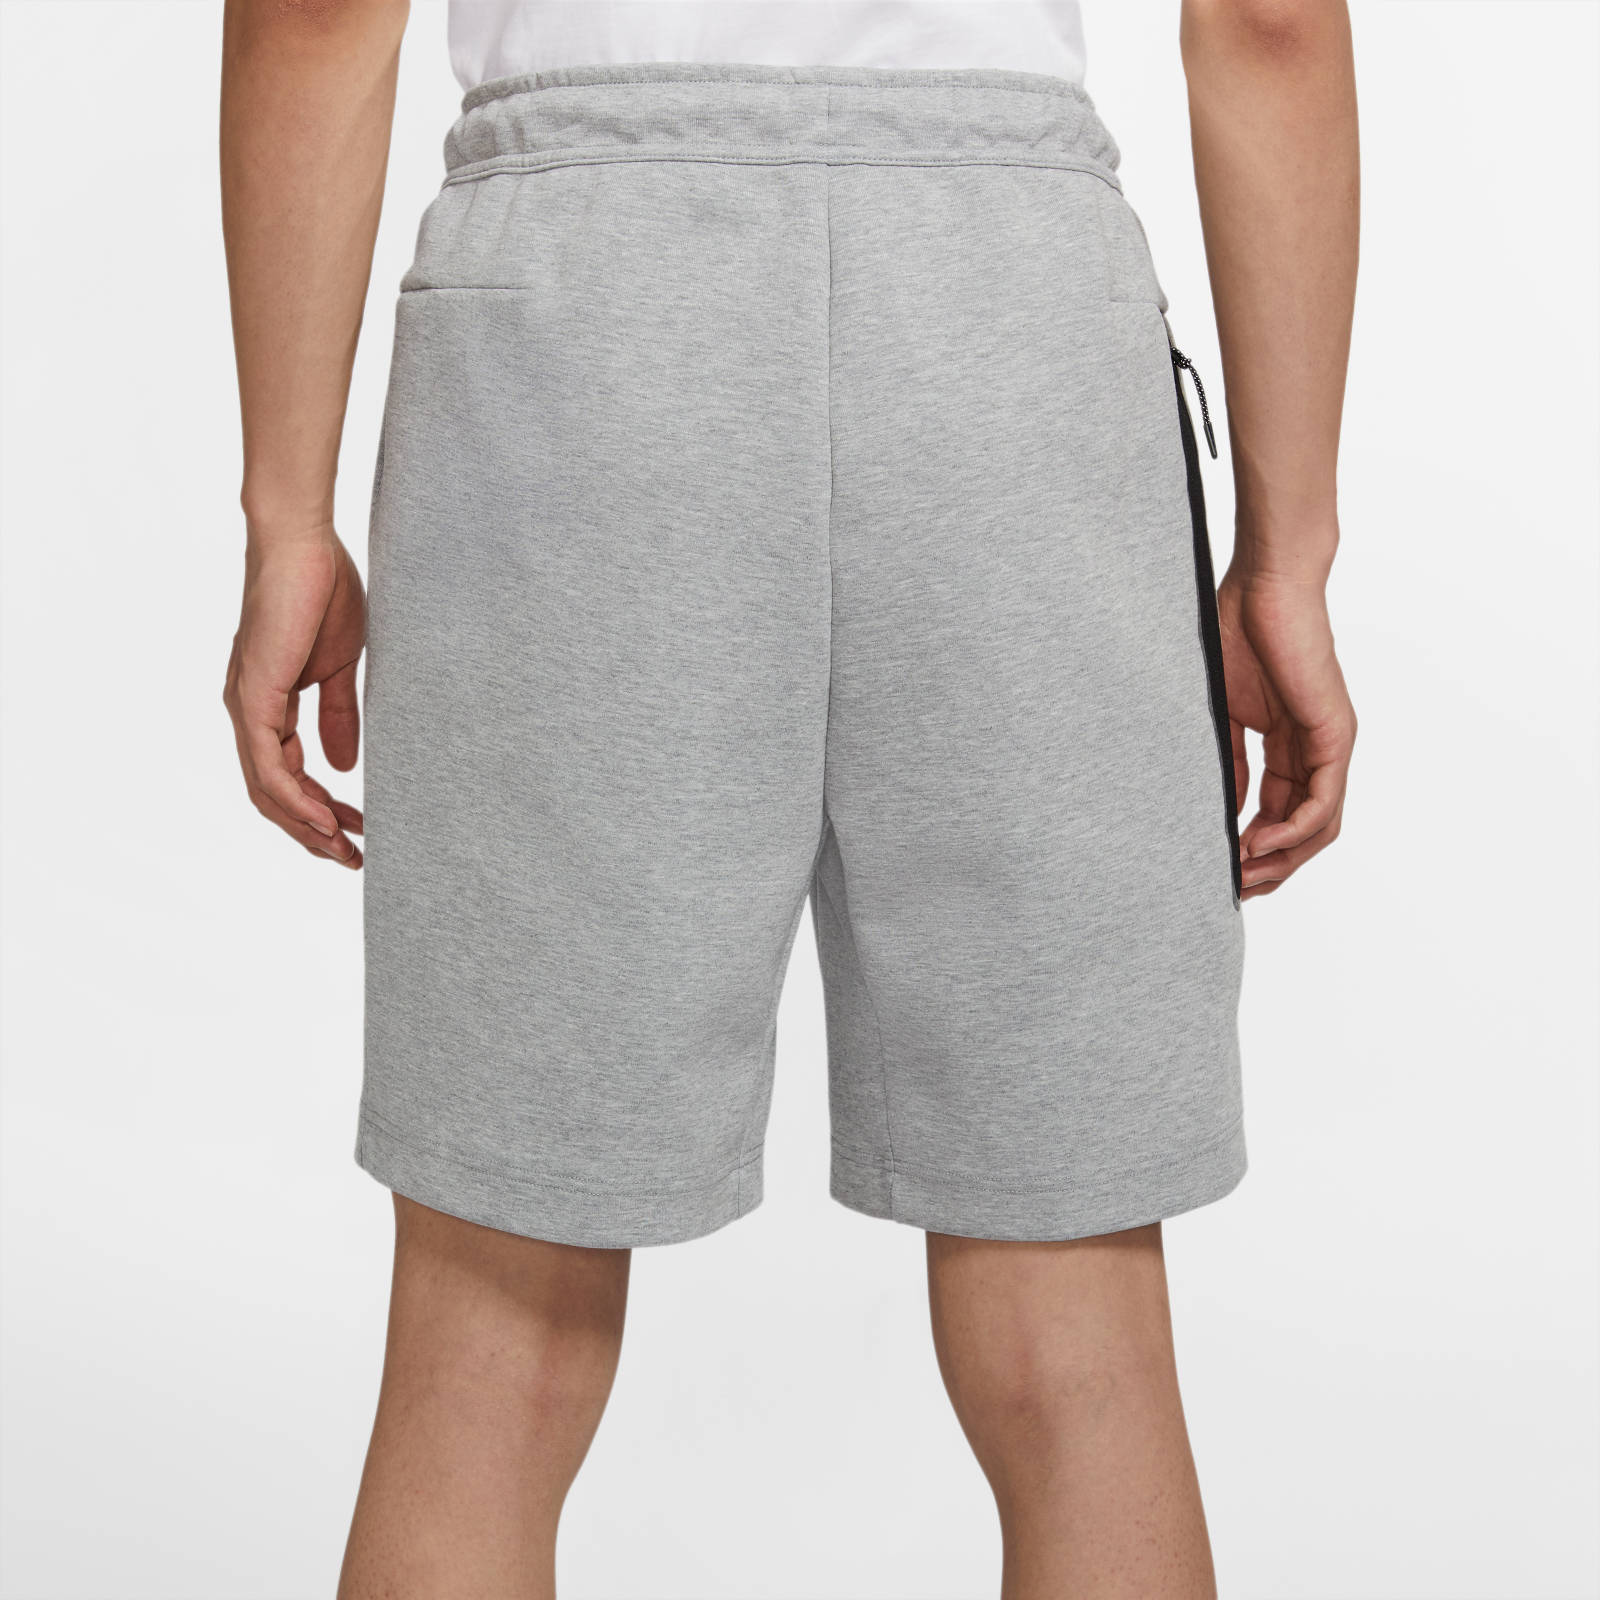 Nike Tech Fleece Short Men | lupon.gov.ph